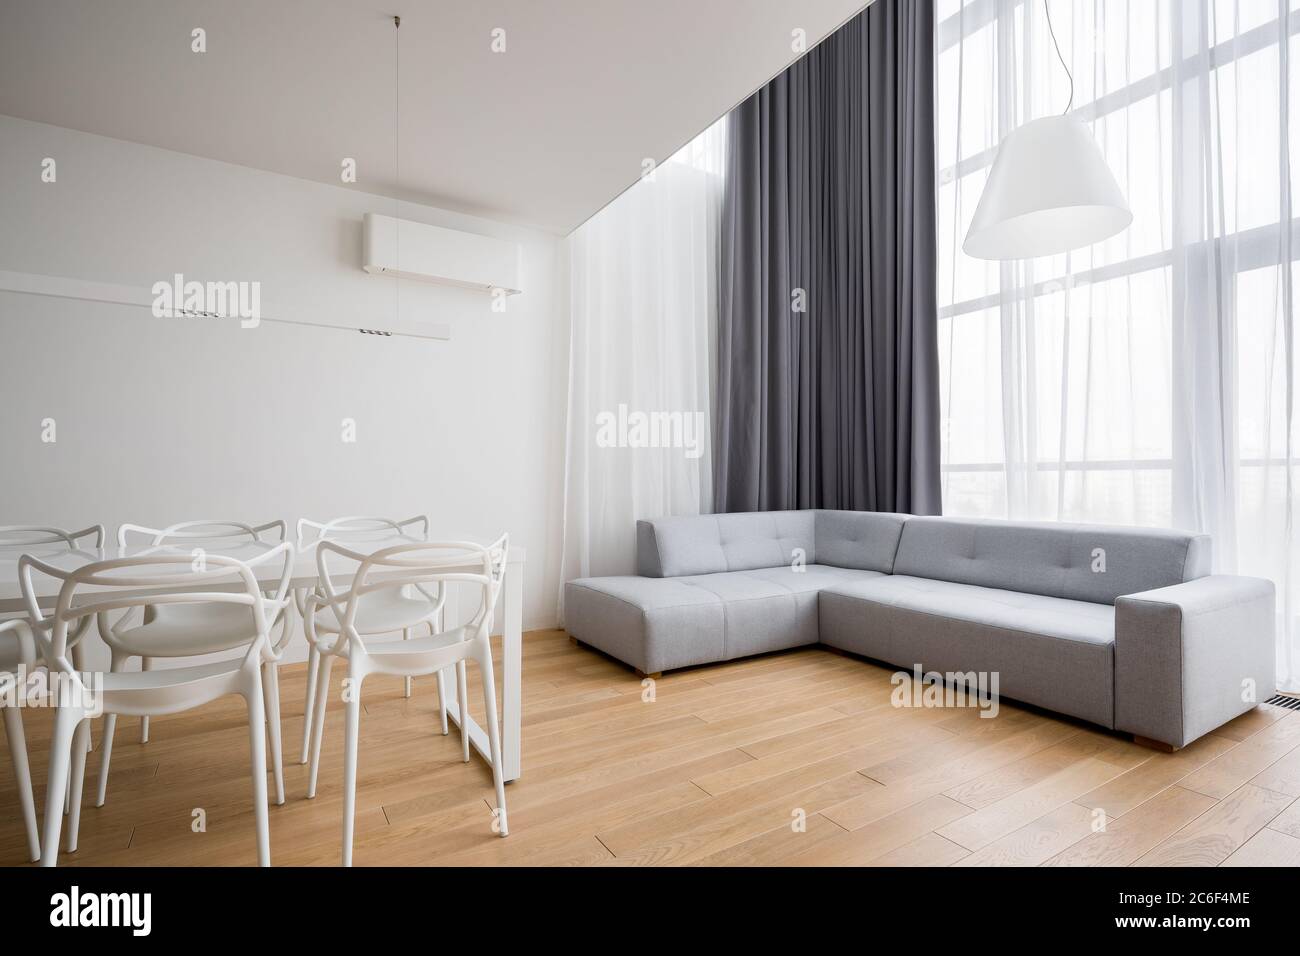 Home interior with corner sofa and new design white chairs Stock Photo